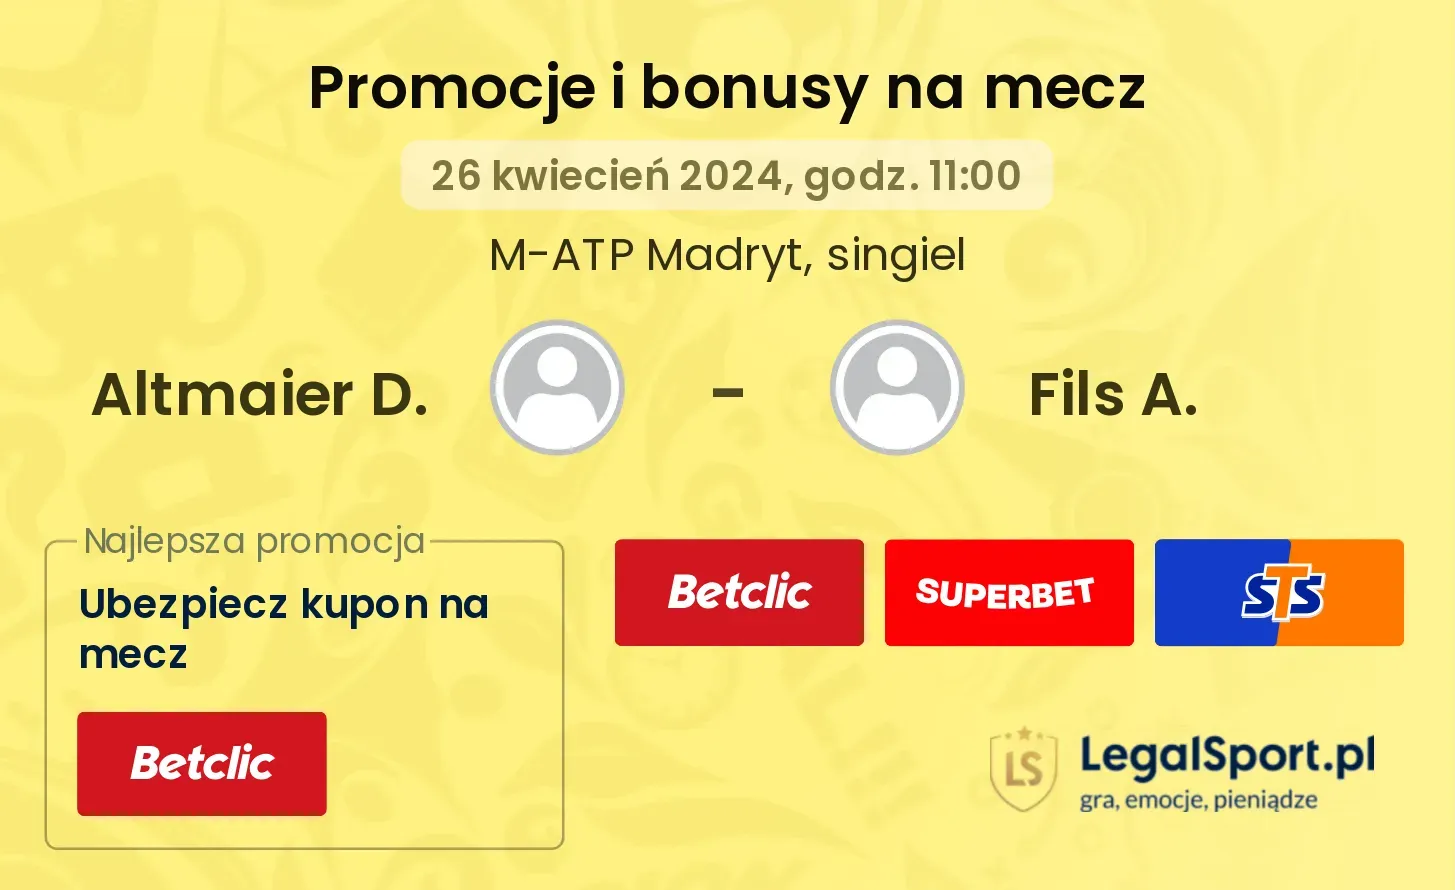 Altmaier D. - Fils A. promocje bonusy na mecz